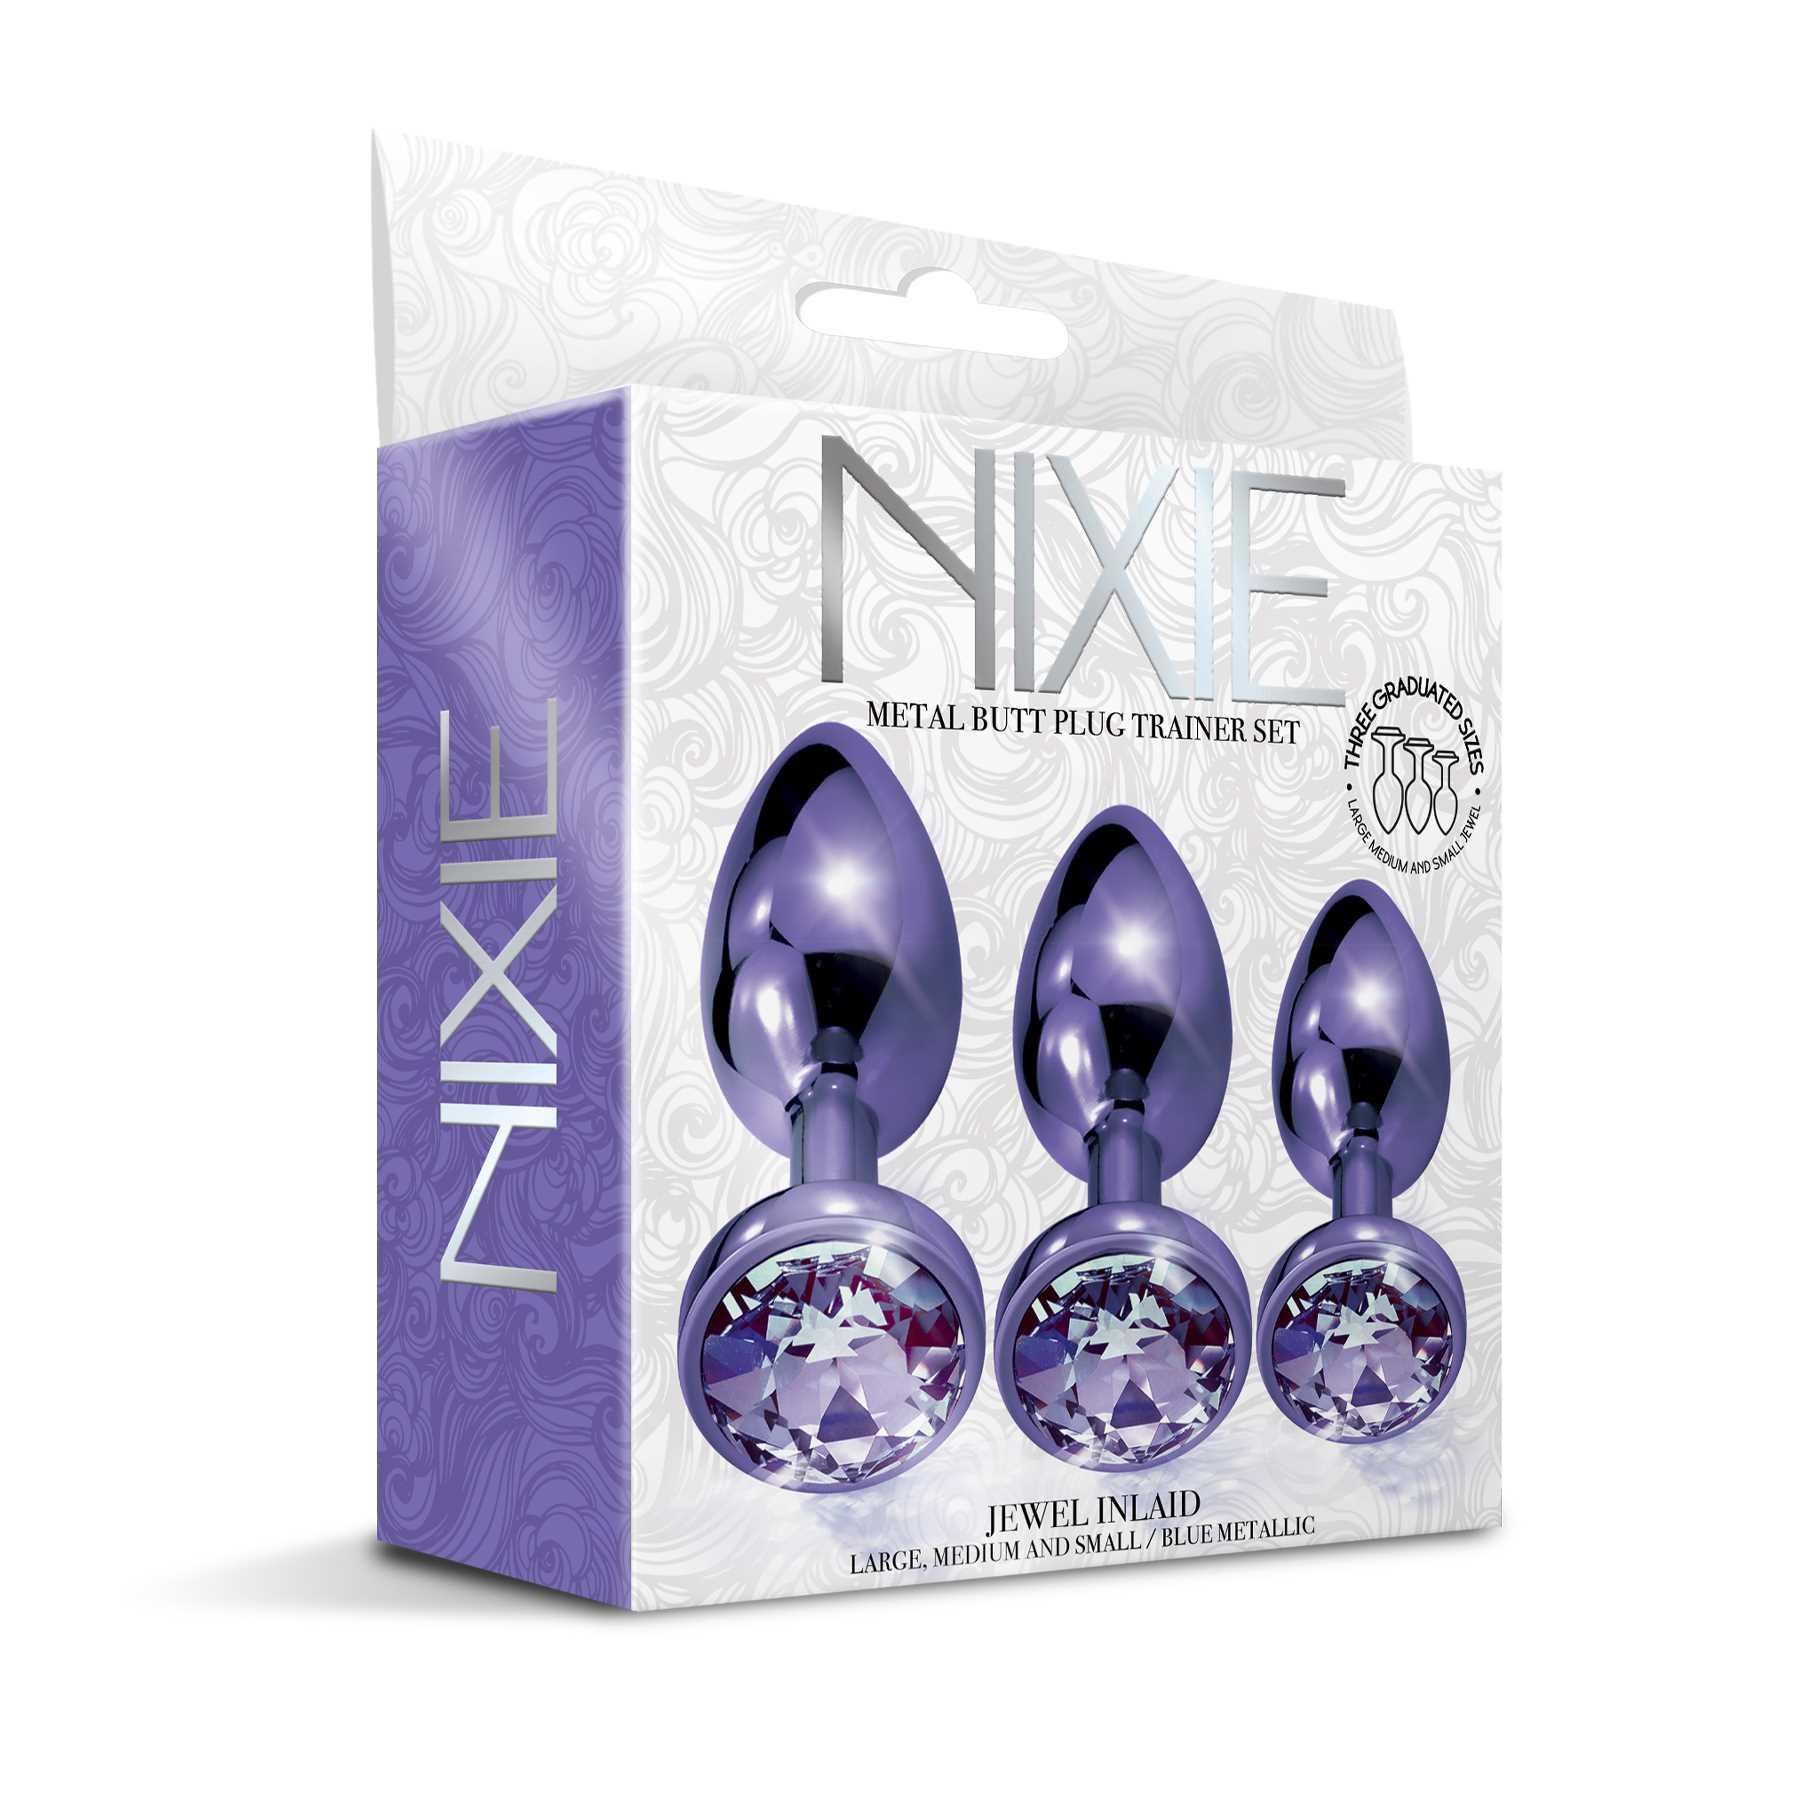 NIXIE Metal Butt Plug Trainer Set Metallic purple packaging